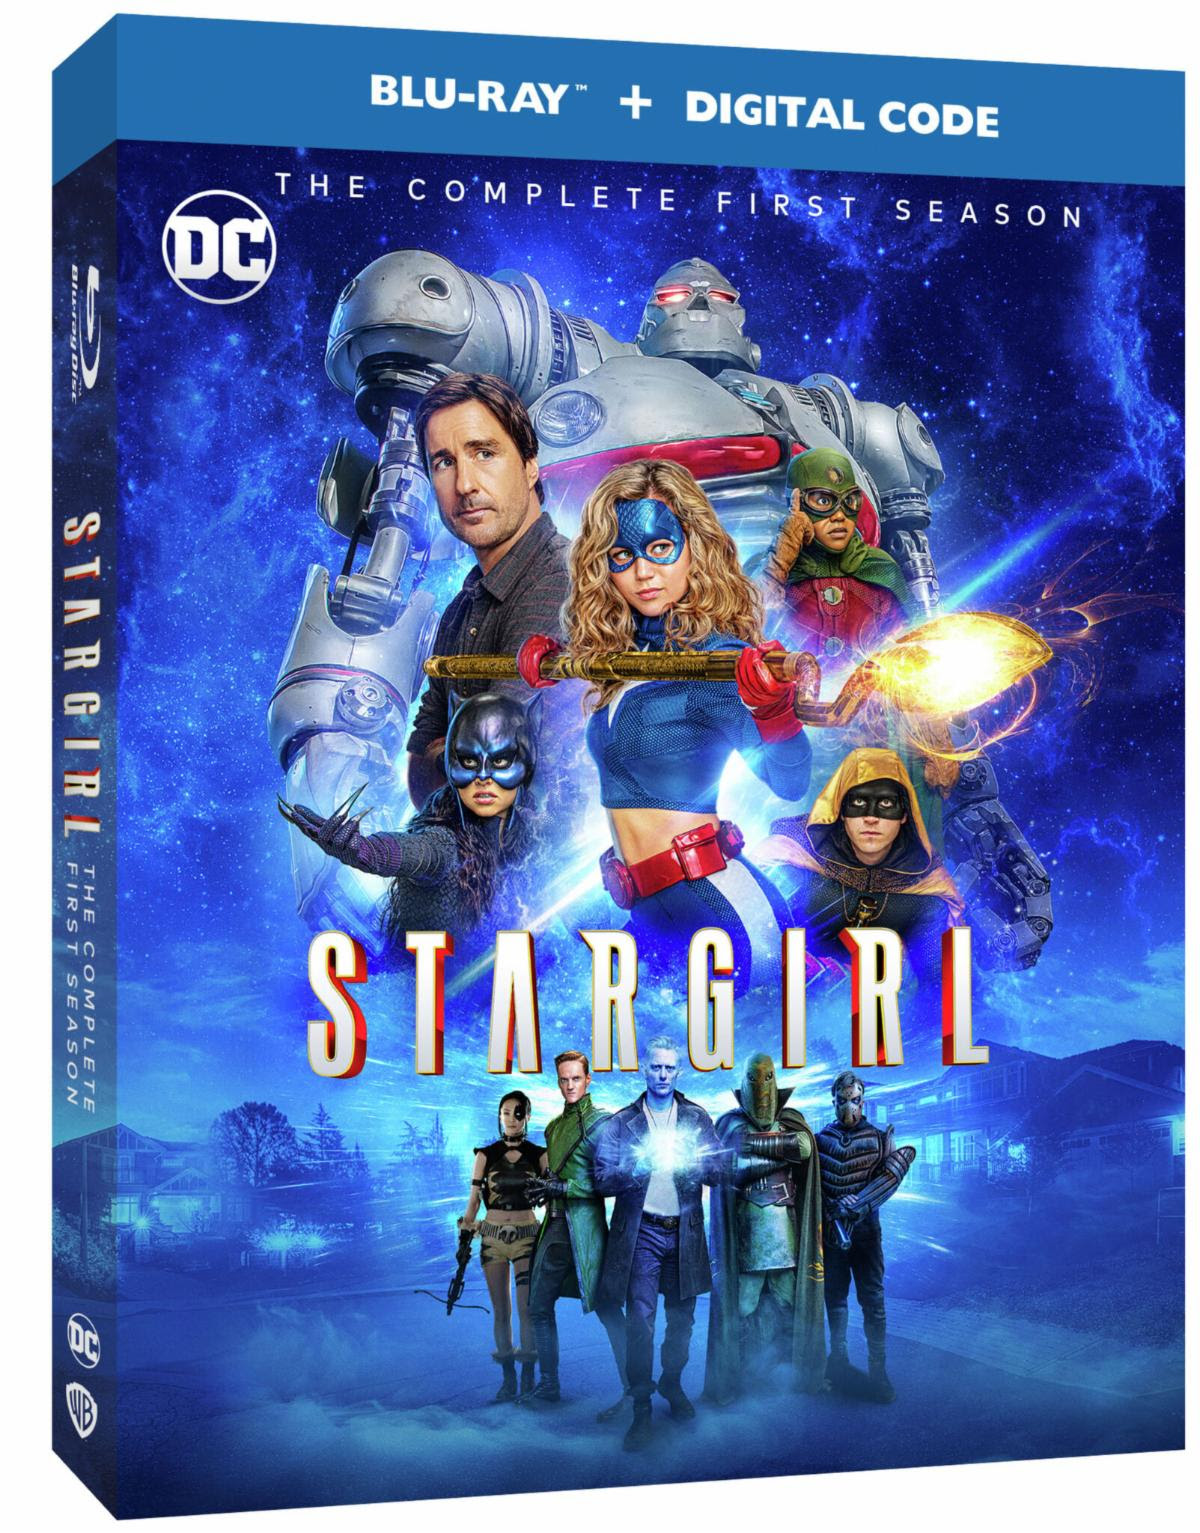 Stargirl season 1 Blu-ray DVD release